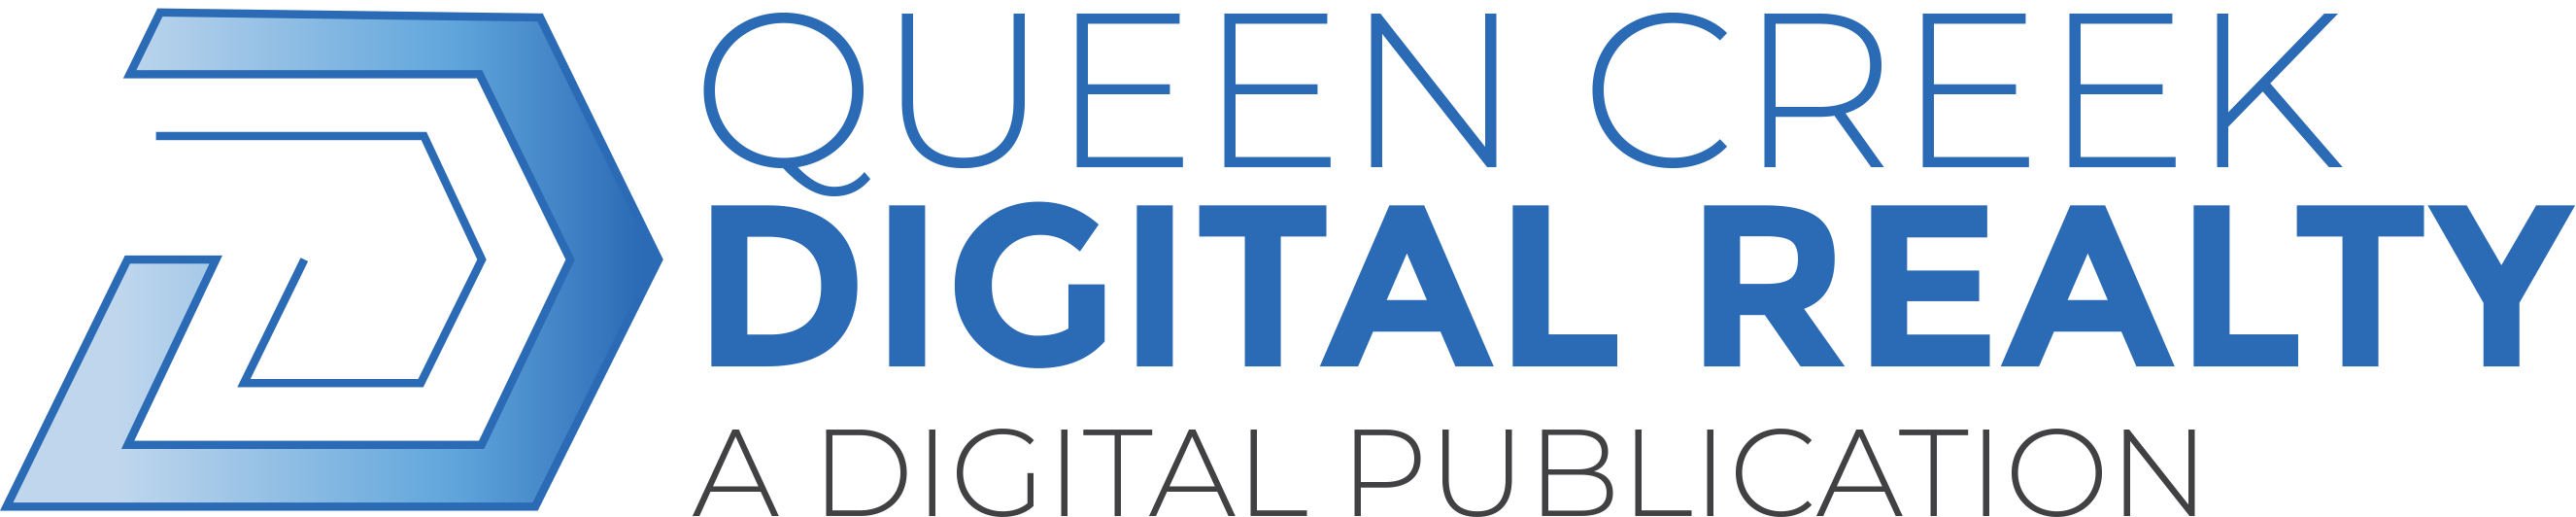 Queen Creek Digital Realty Logo